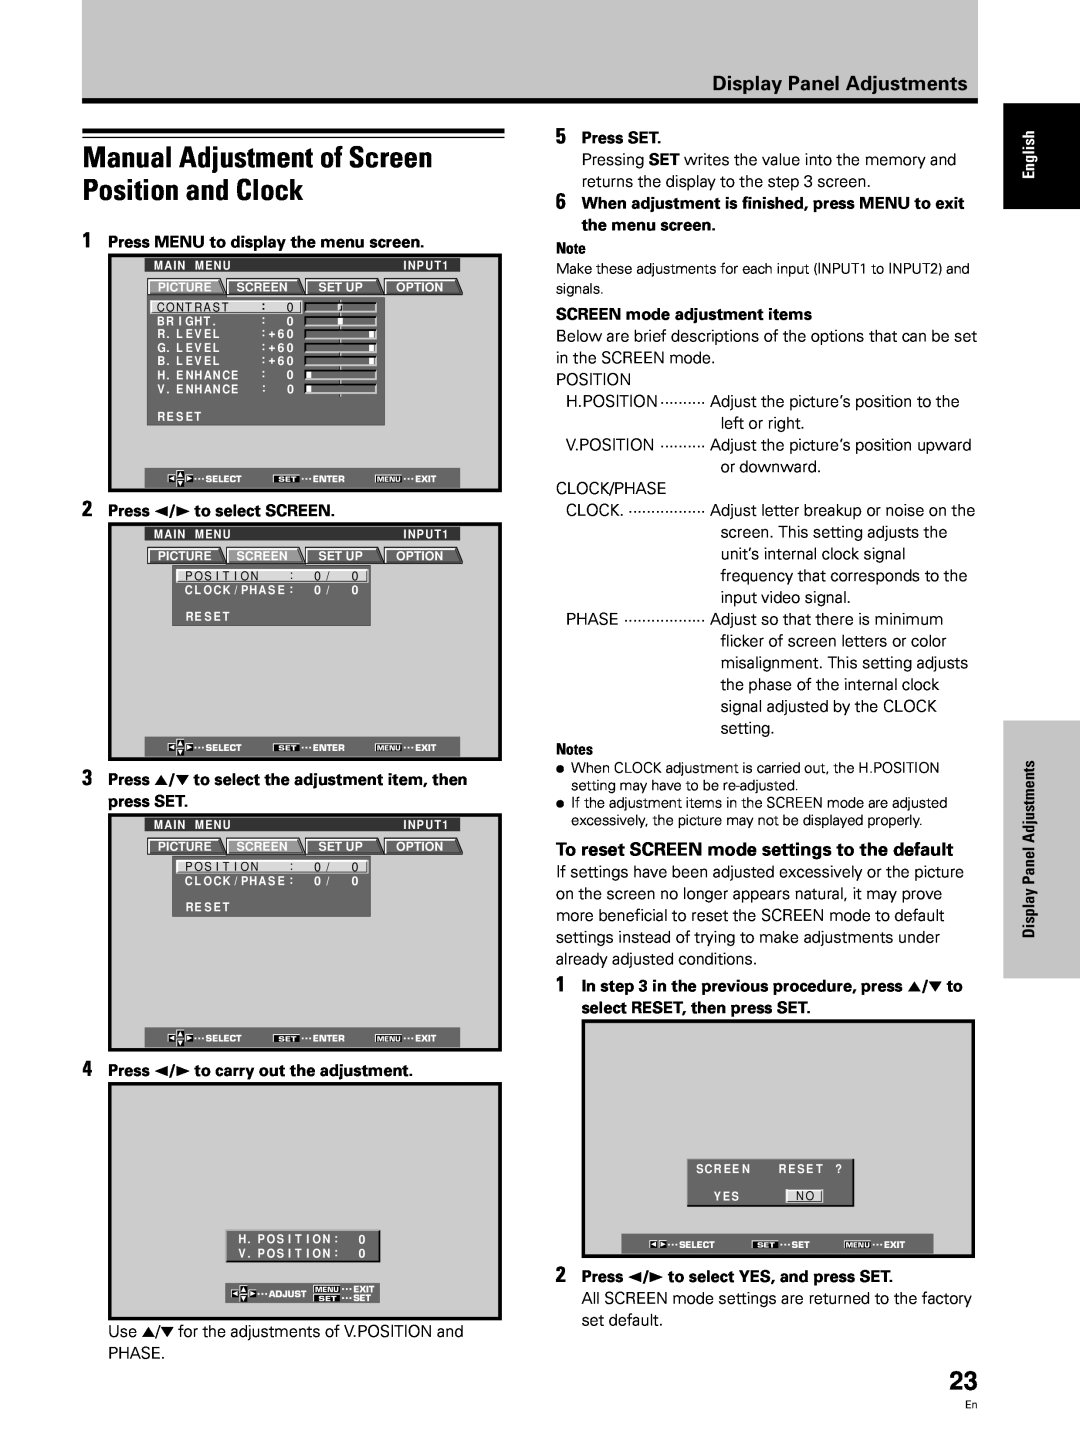 Hitachi CMP5000WXJ Manual Adjustment of Screen Position and Clock, Display Panel Adjustments, 2Press 2/3 to select SCREEN 